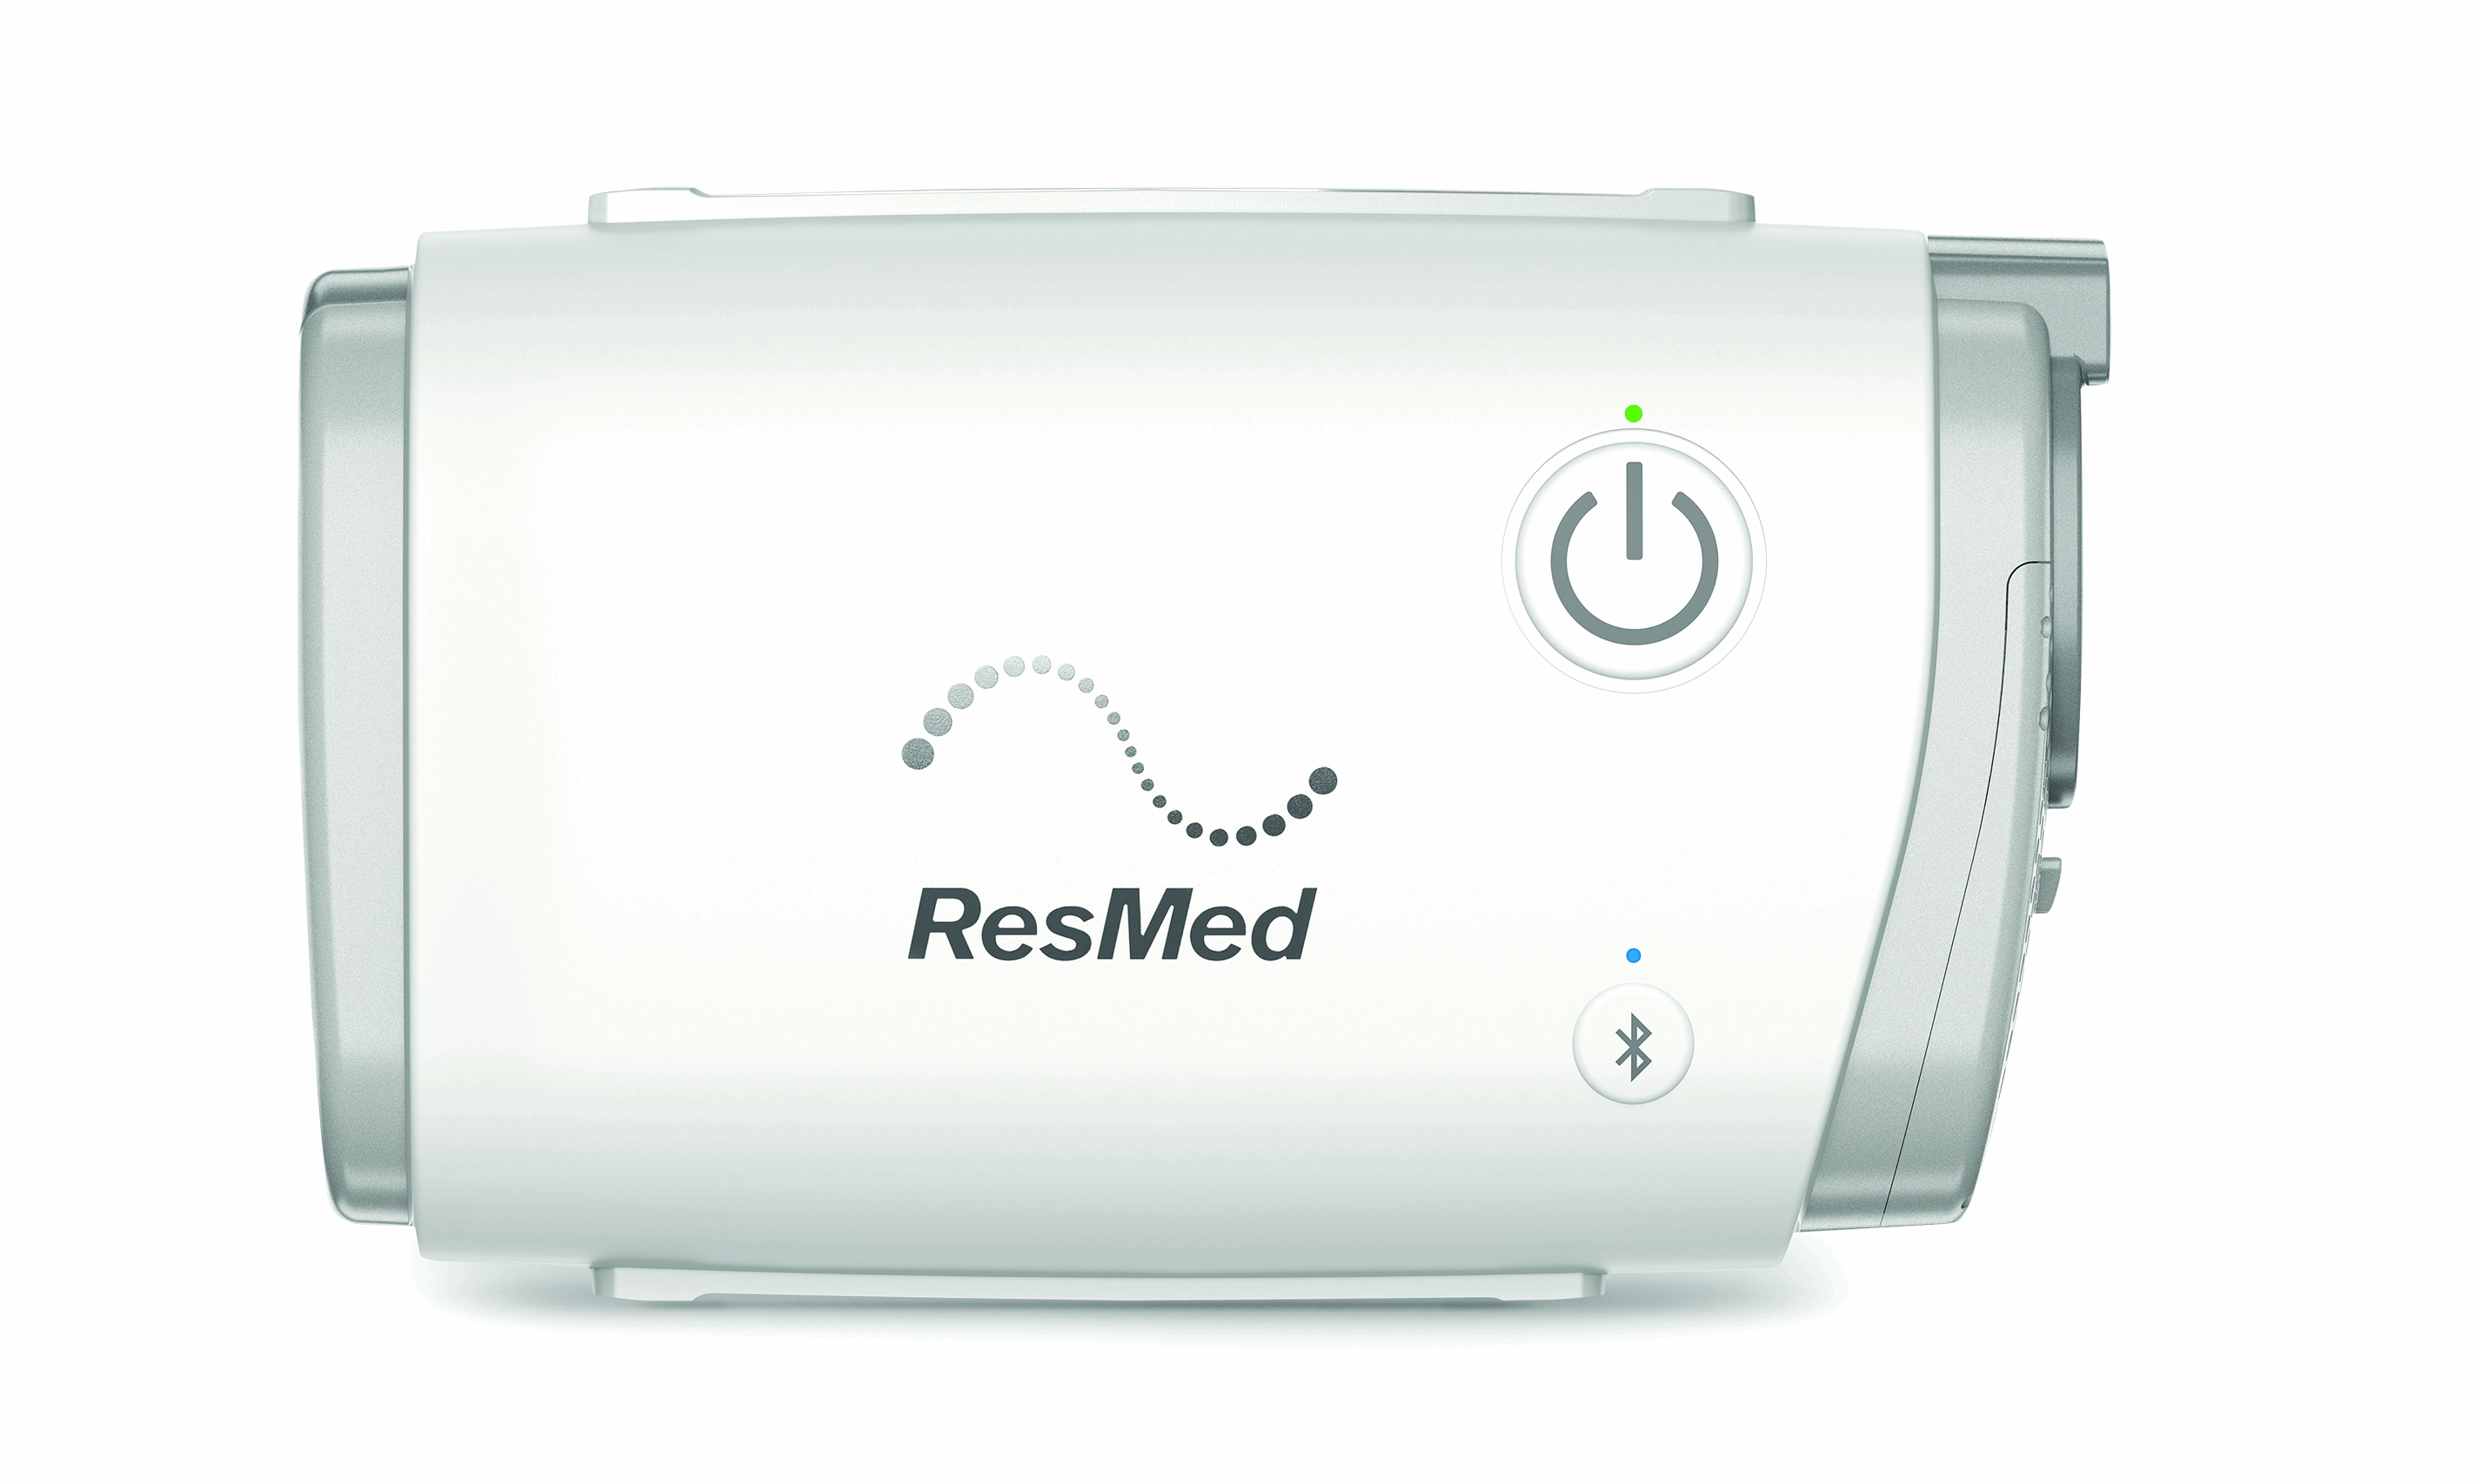 ResMed AirMini™ Autoset™ Portable Travel CPAP Machine